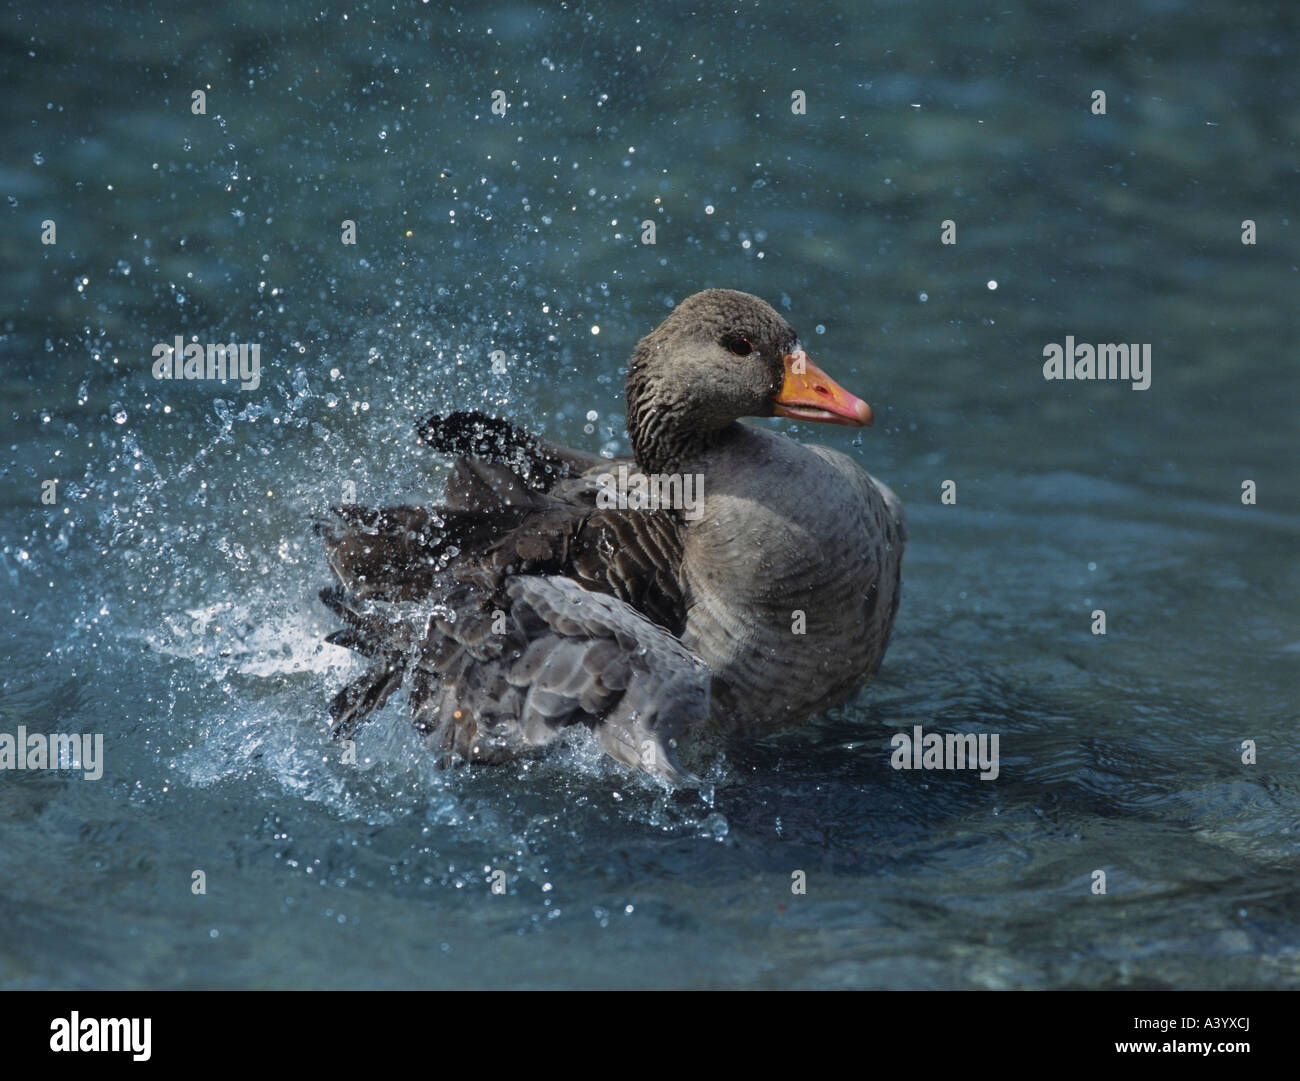 Mallard duck splashing in water Stock Photo